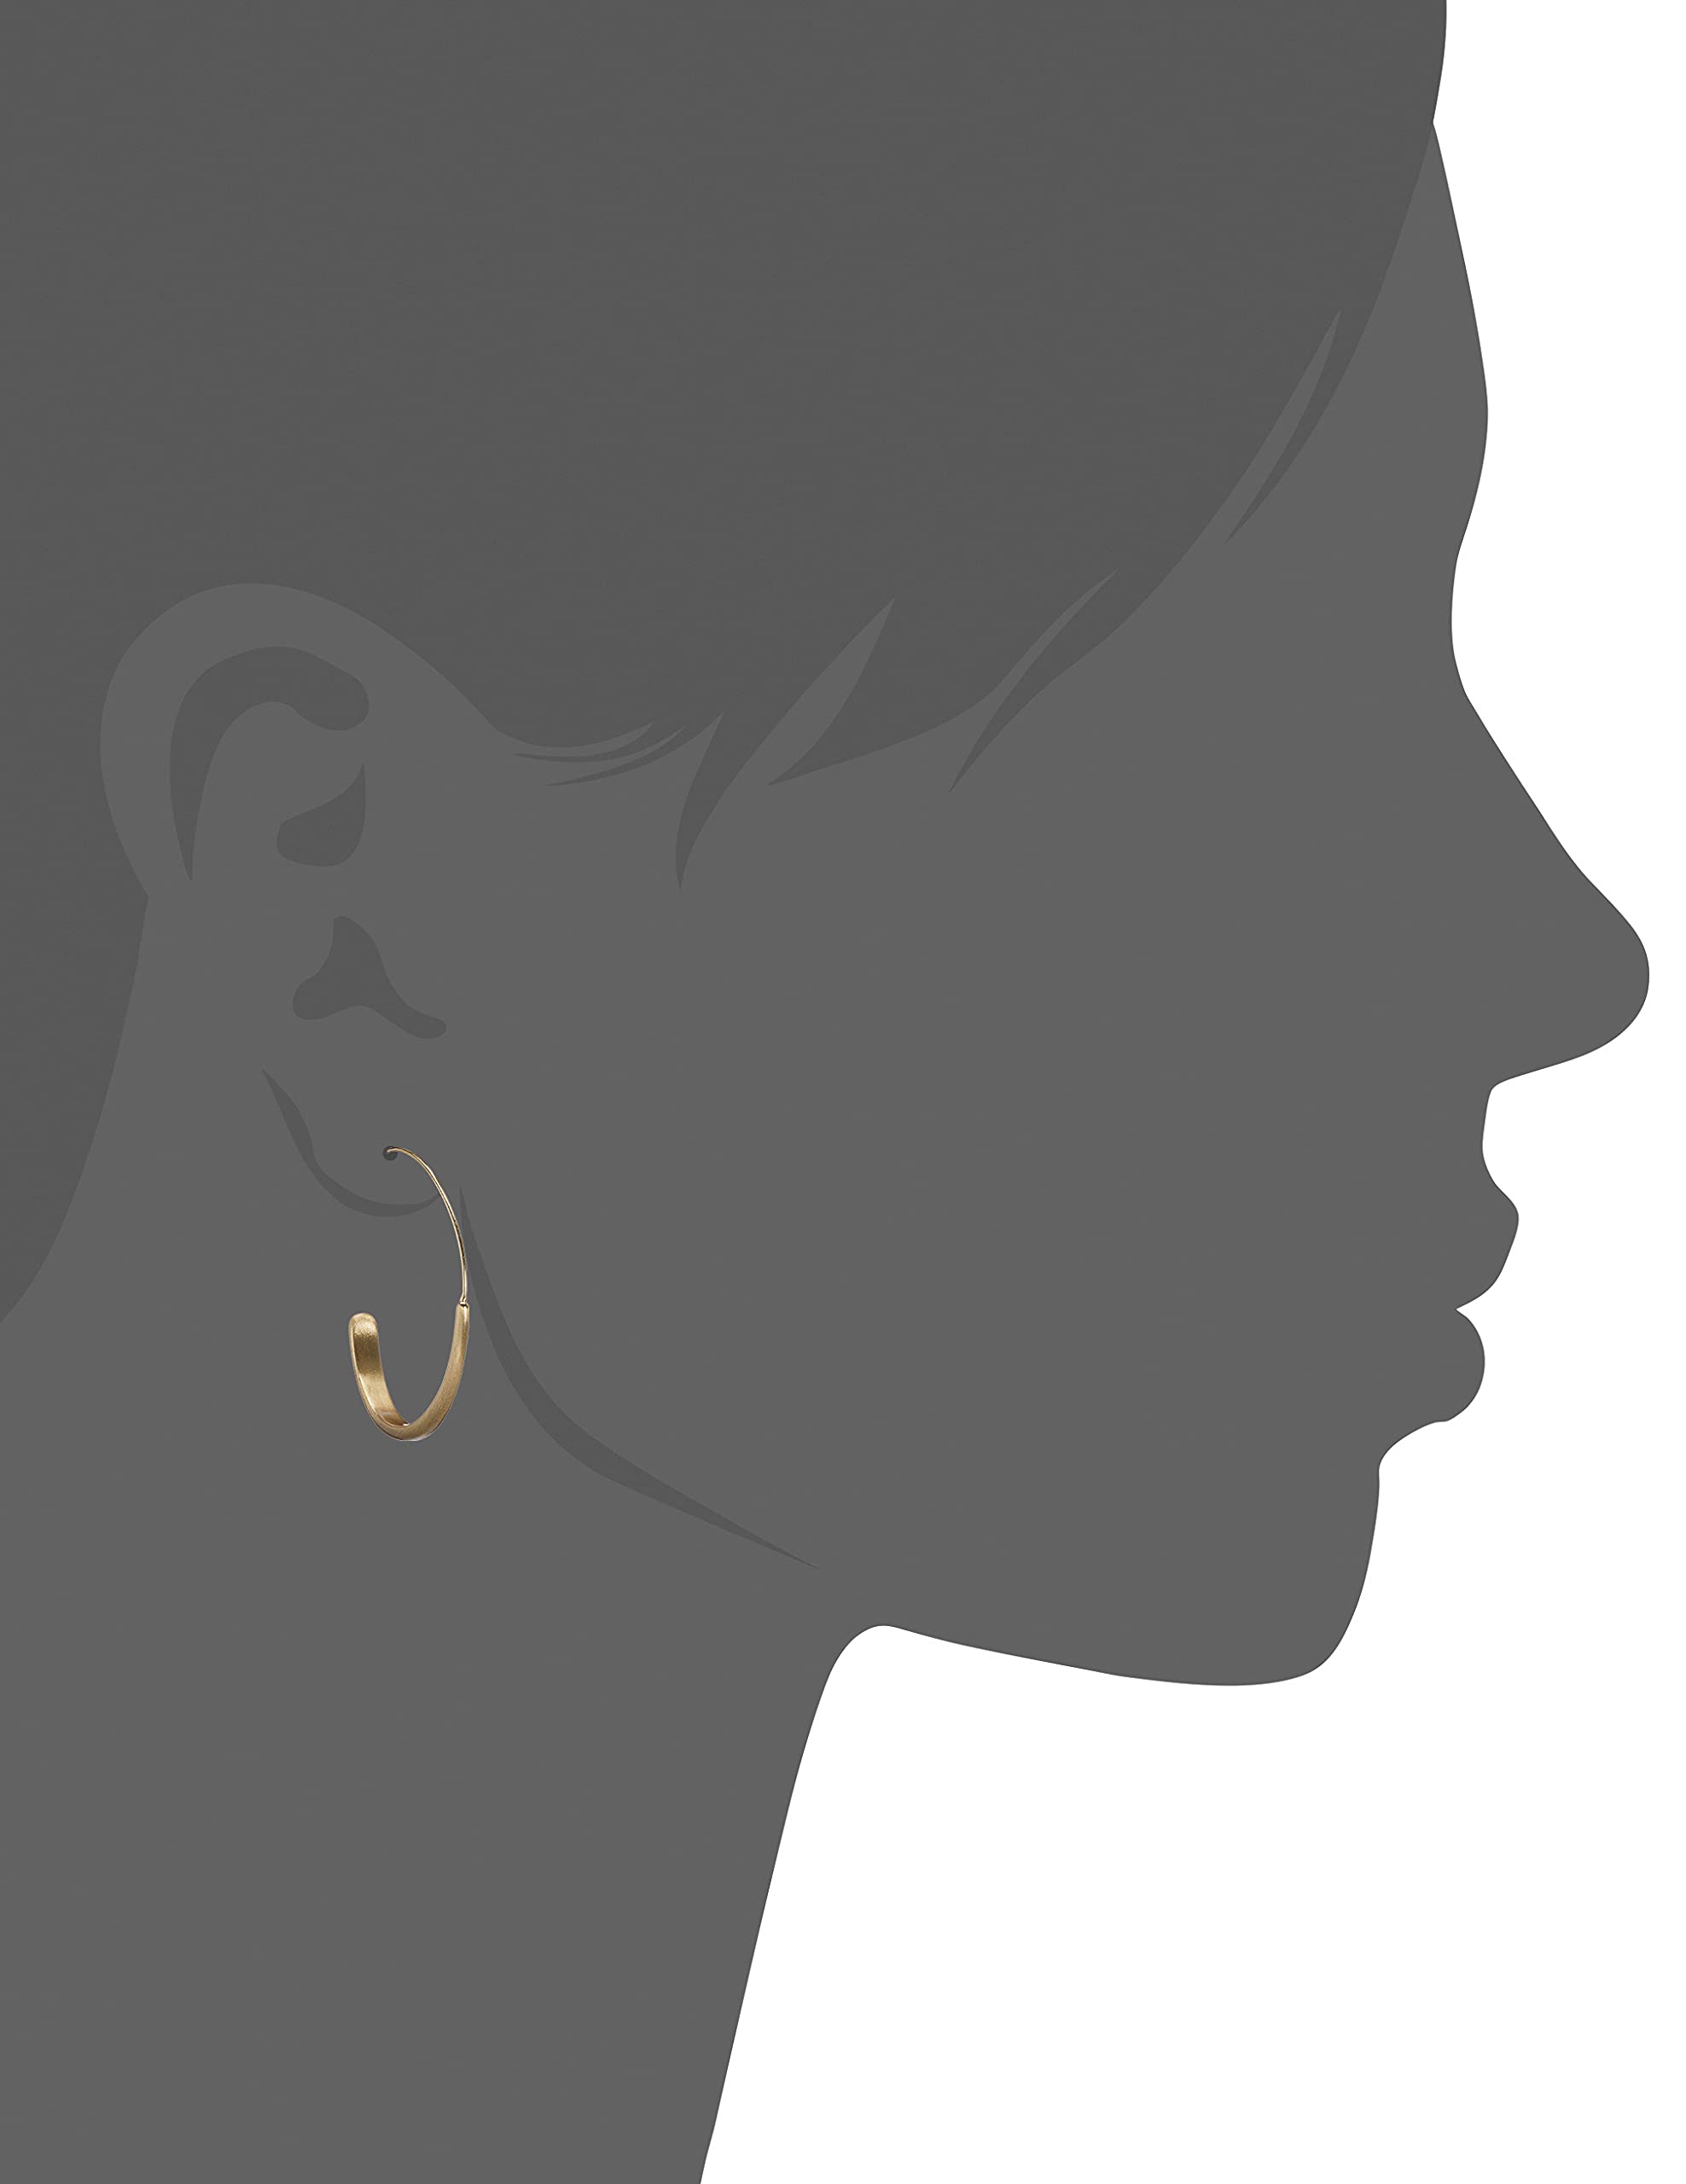 Lucky Brand Women's Brushed Gold Modern Hoop Earrings, One Size